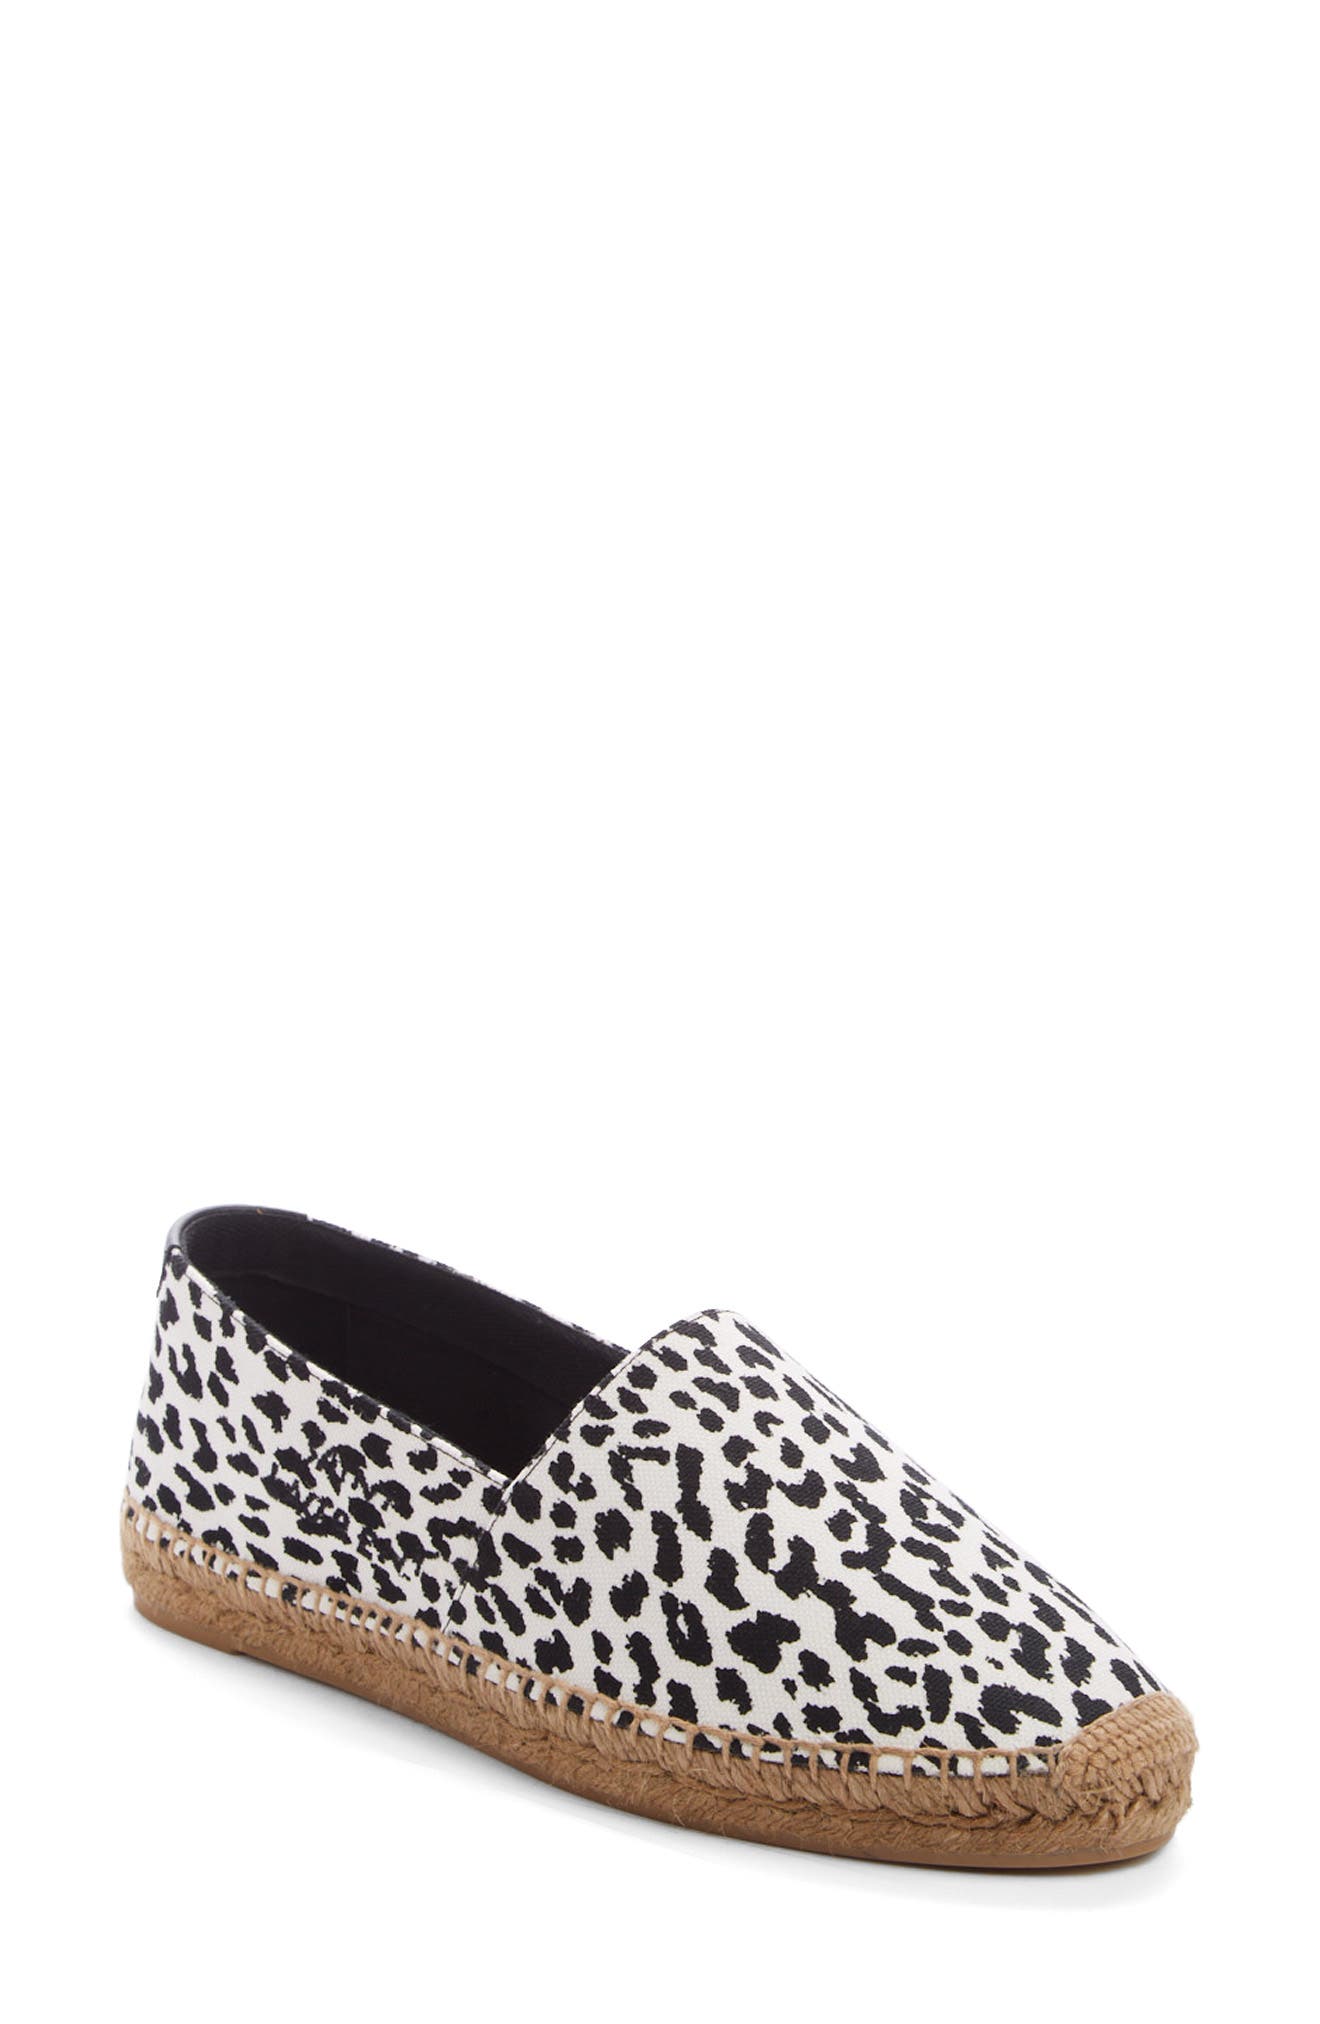 drizzle grey slub chambray with cheetah print women's paseo sneakers